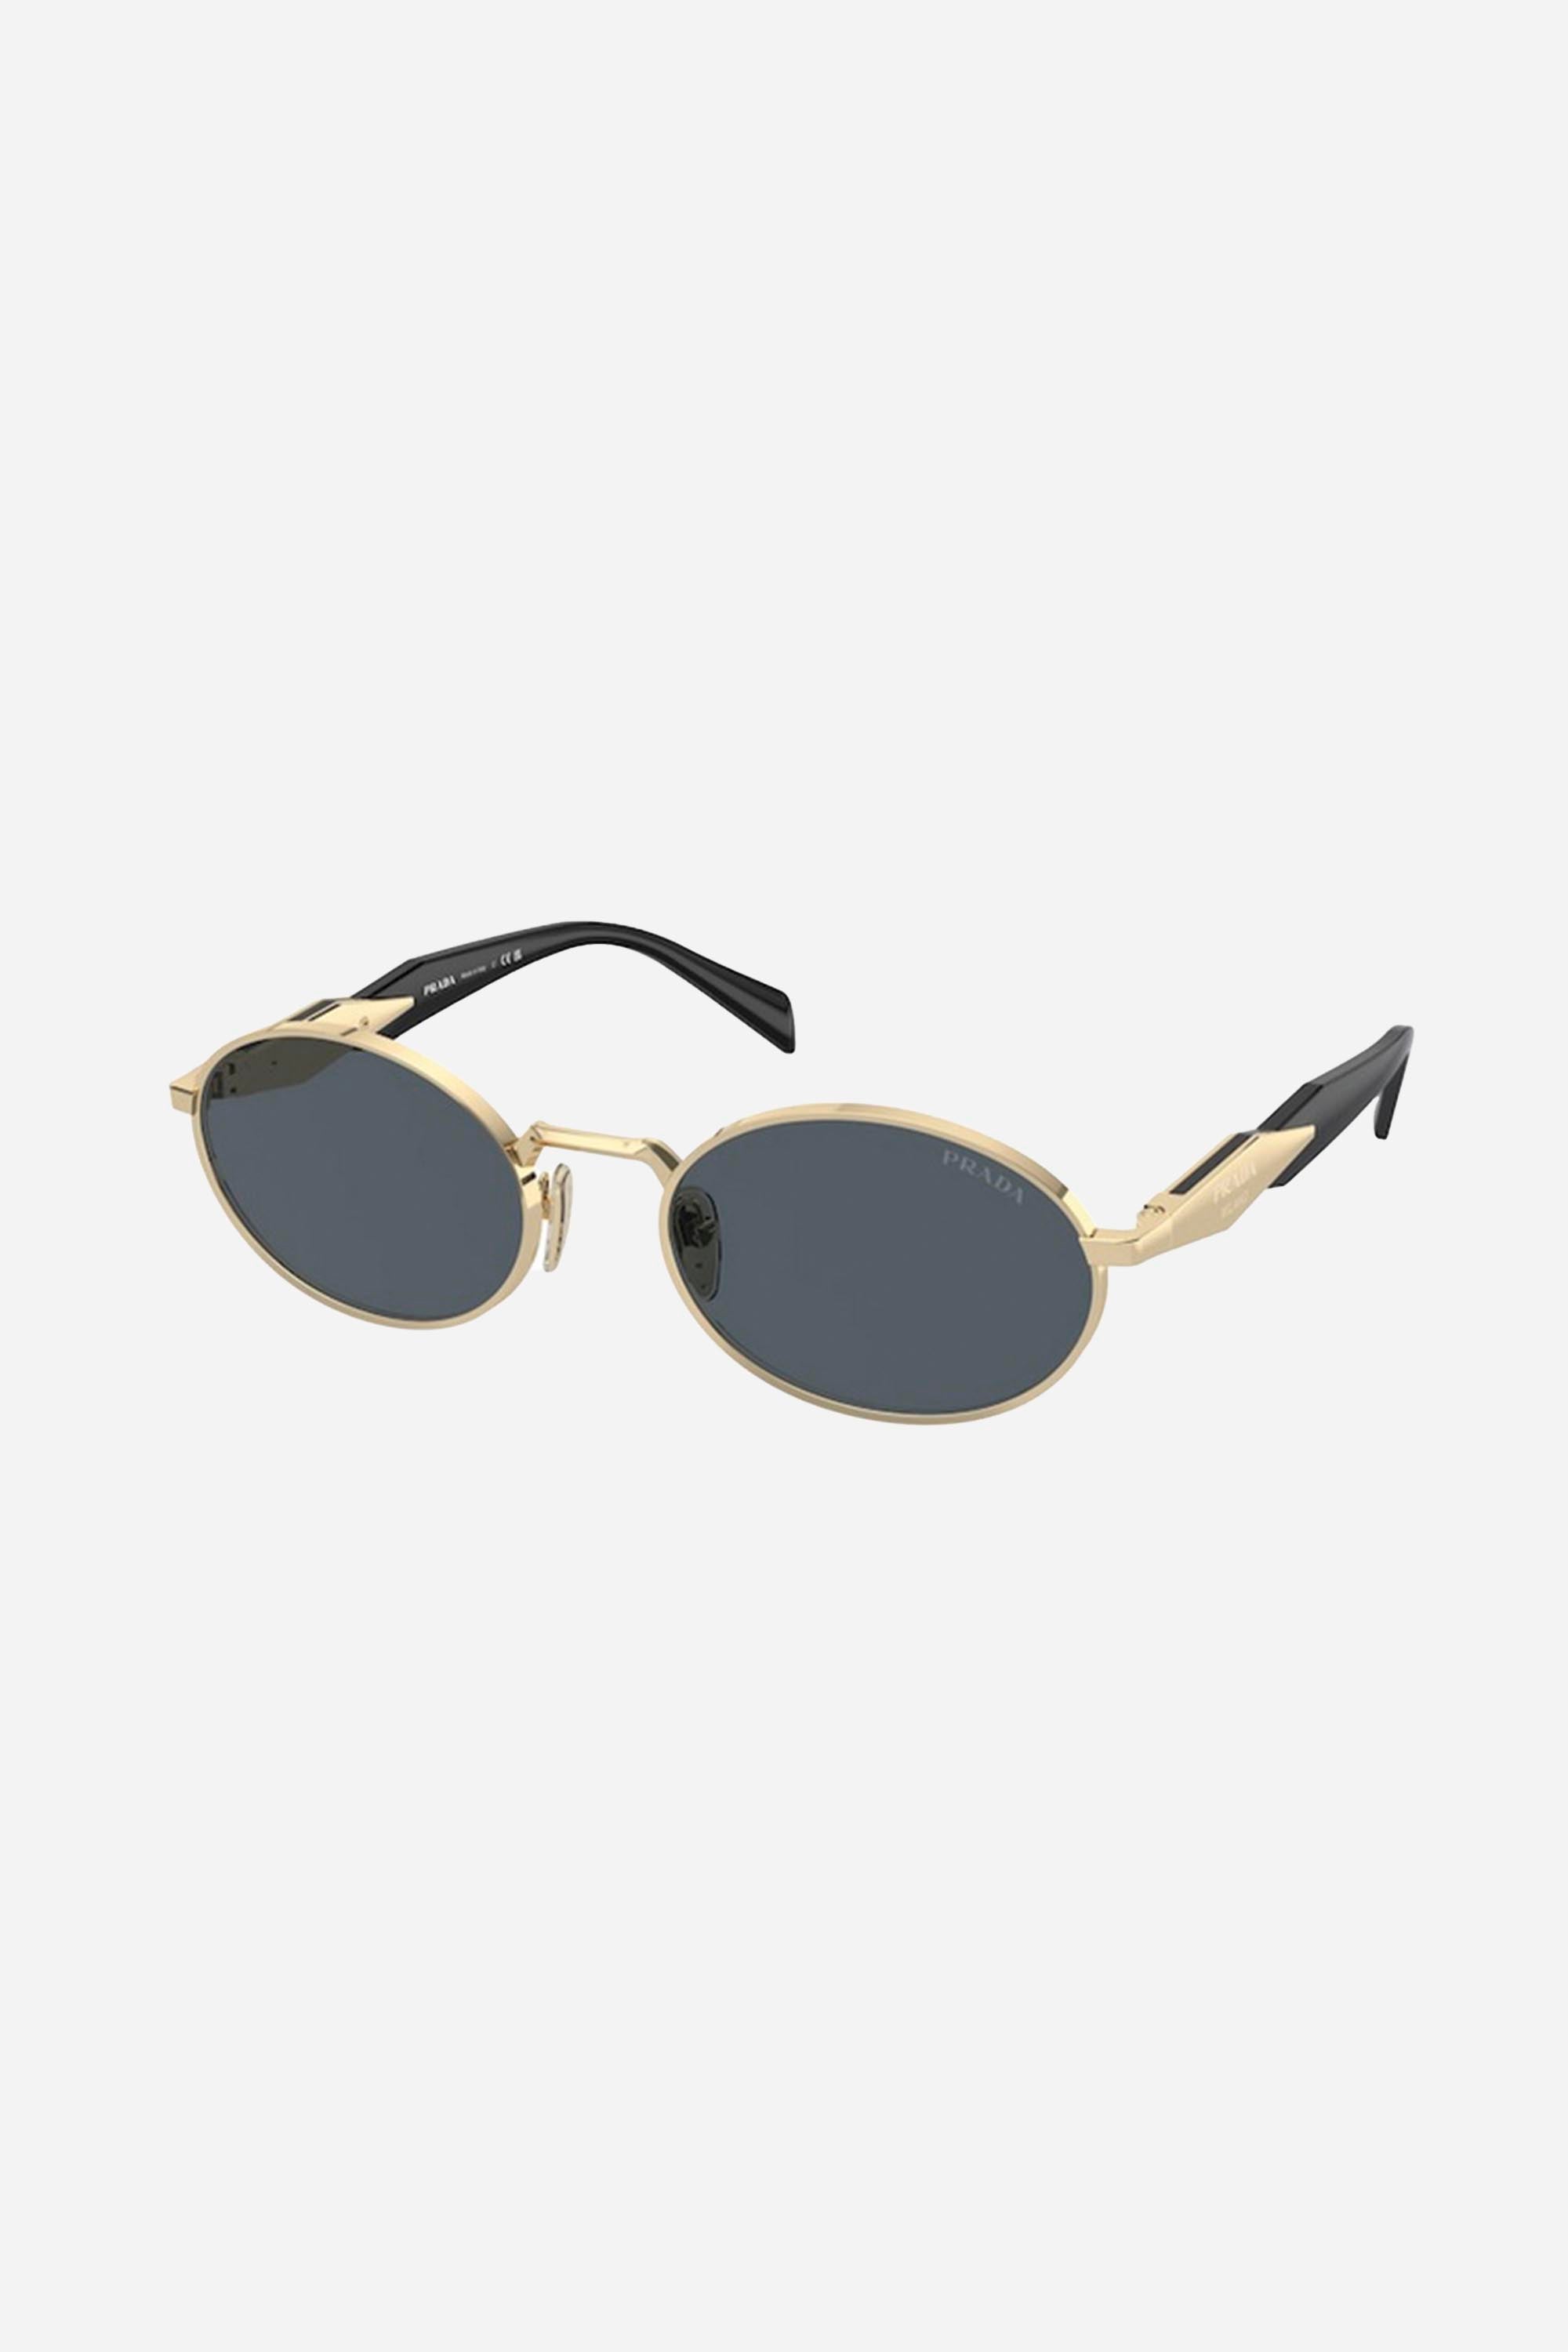 Prada gold round sunglasses - Eyewear Club